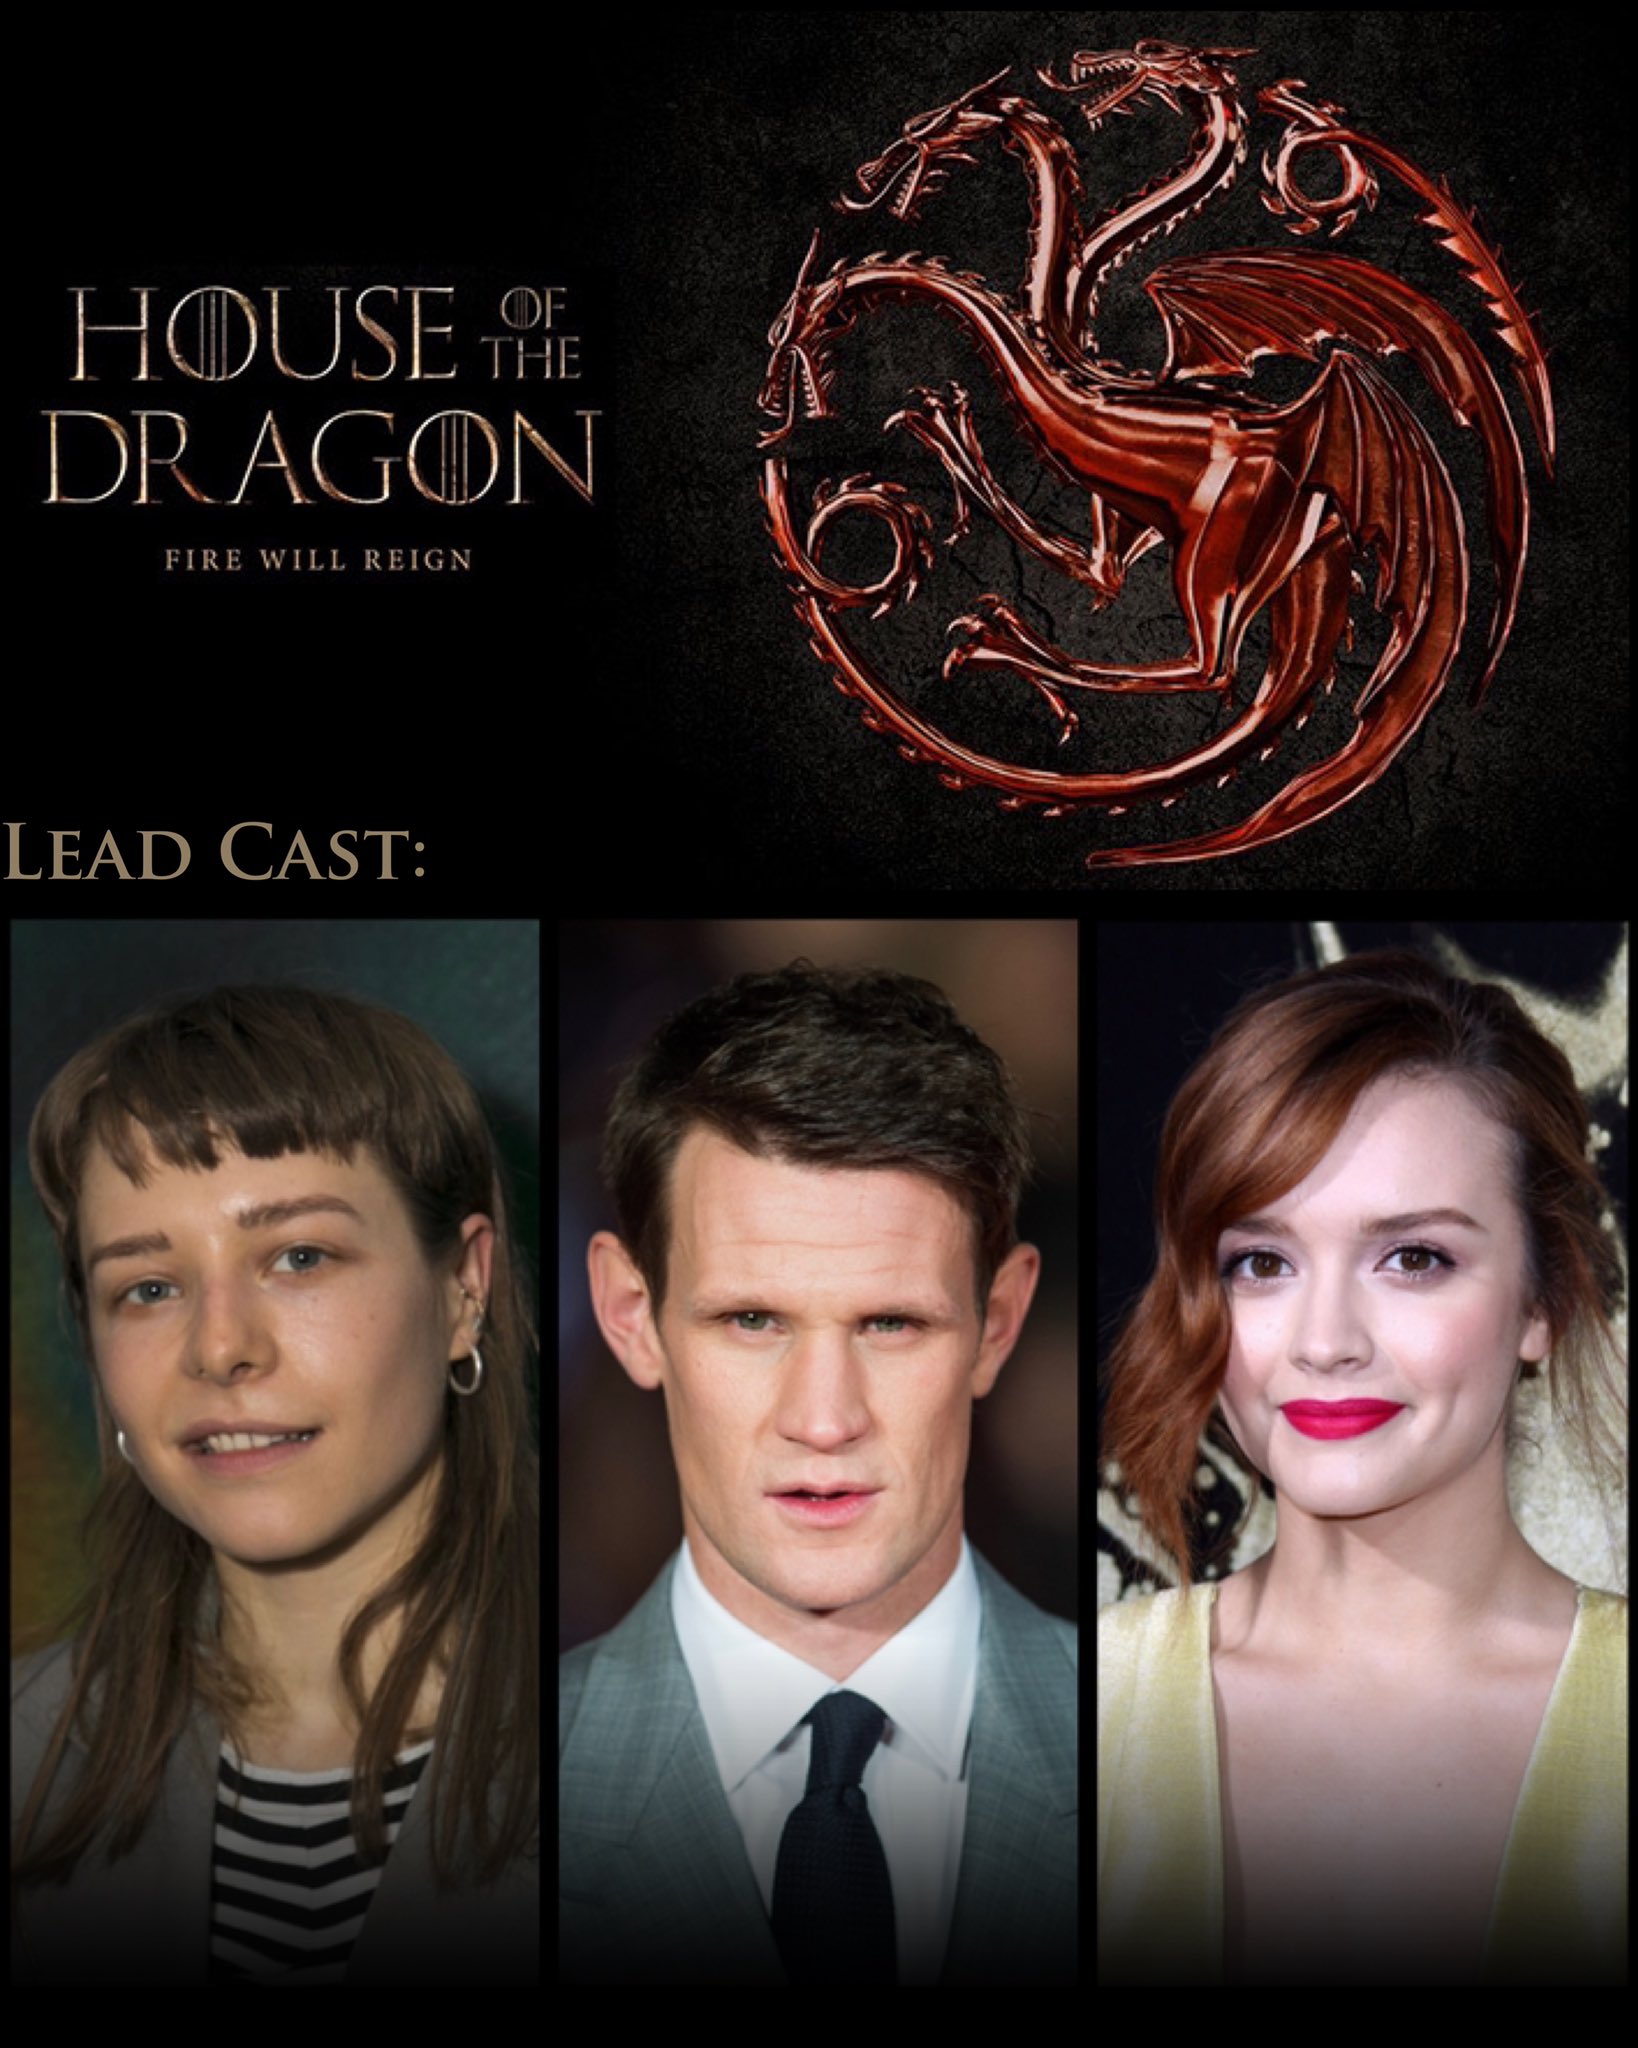 House of the Dragon' Cast Announced, Including Matt Smith